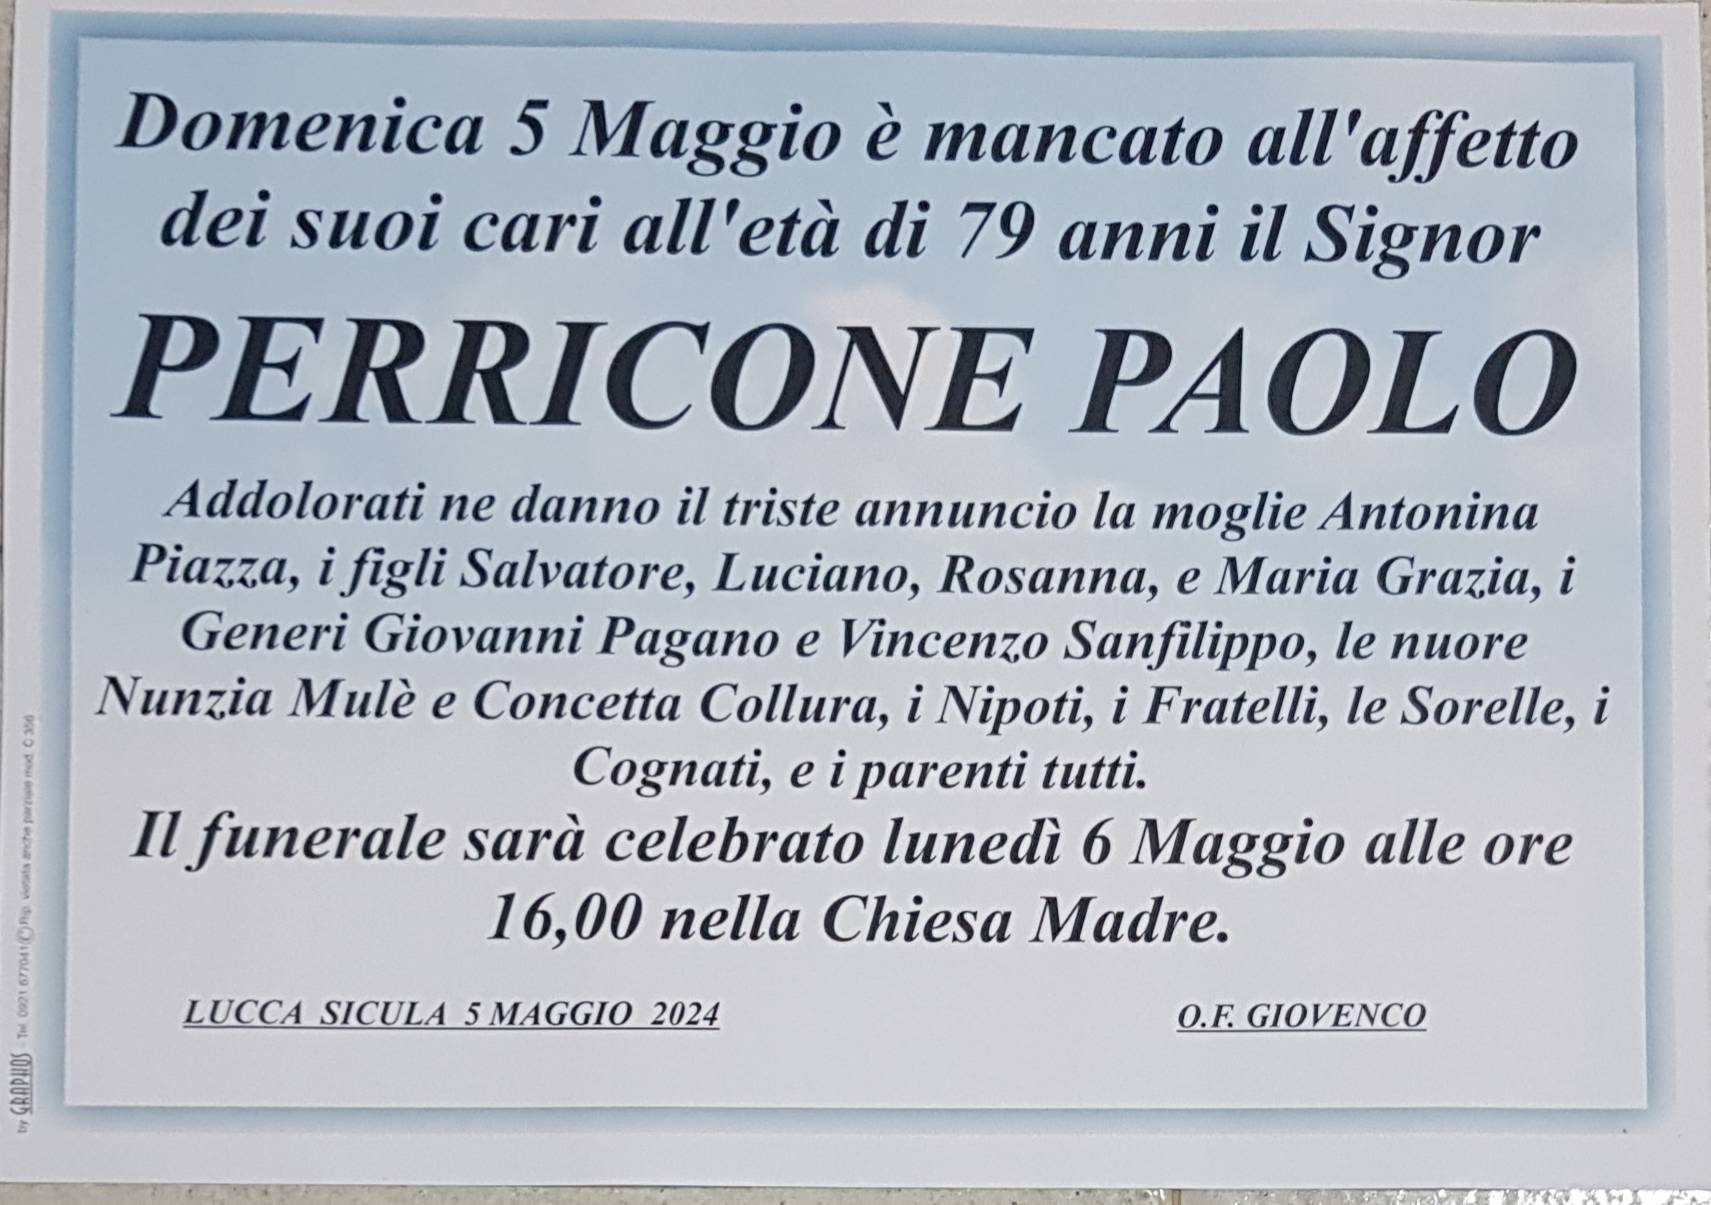 Paolo Perricone